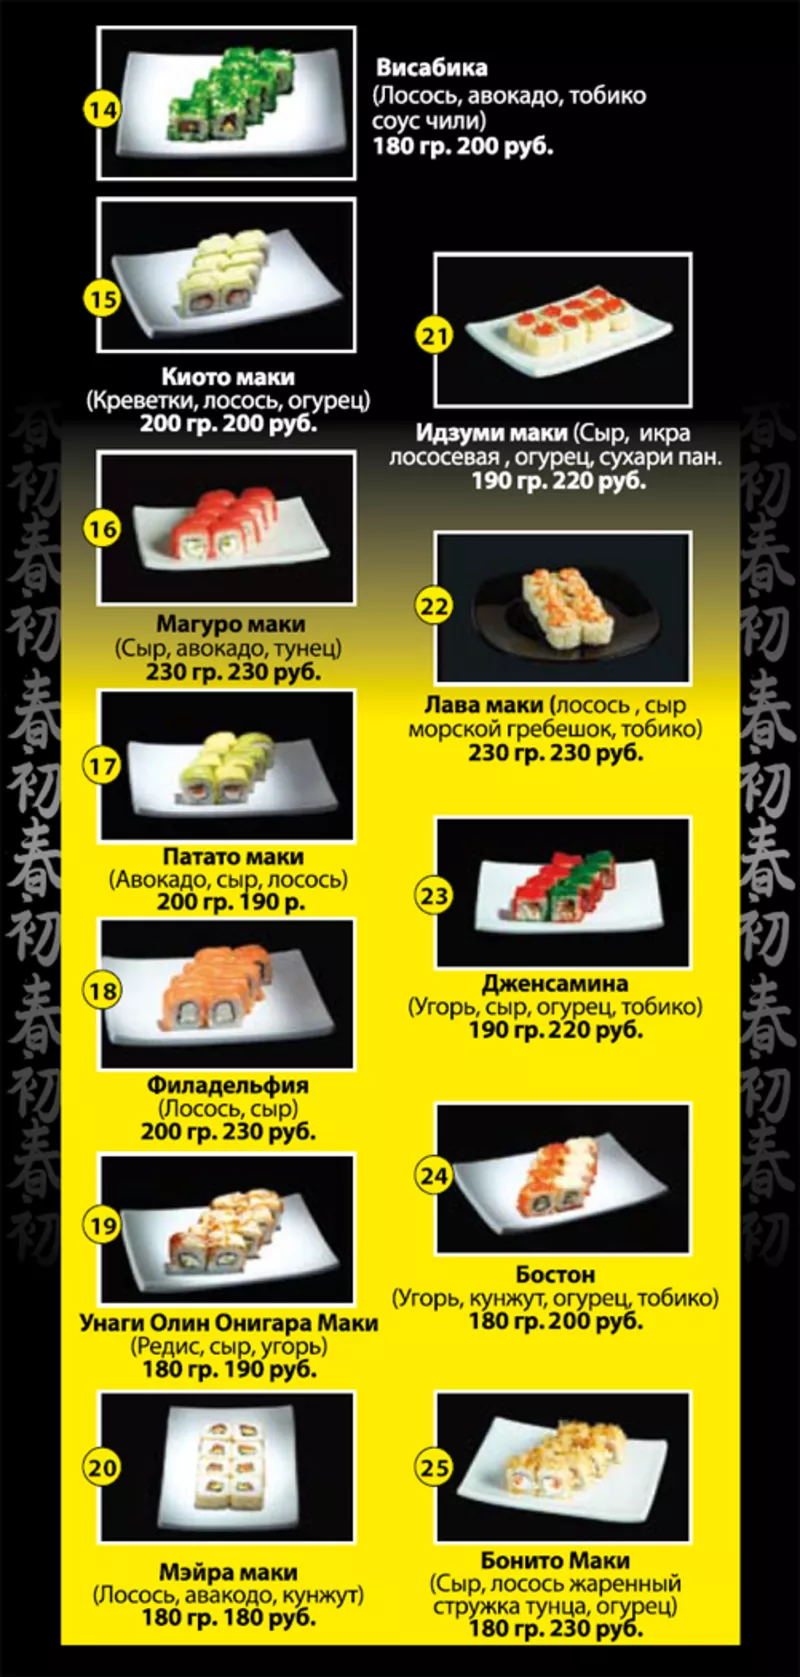 Master Sushi (Мастер Суши) | Вкуснейший ролл за 99 рублей! 3